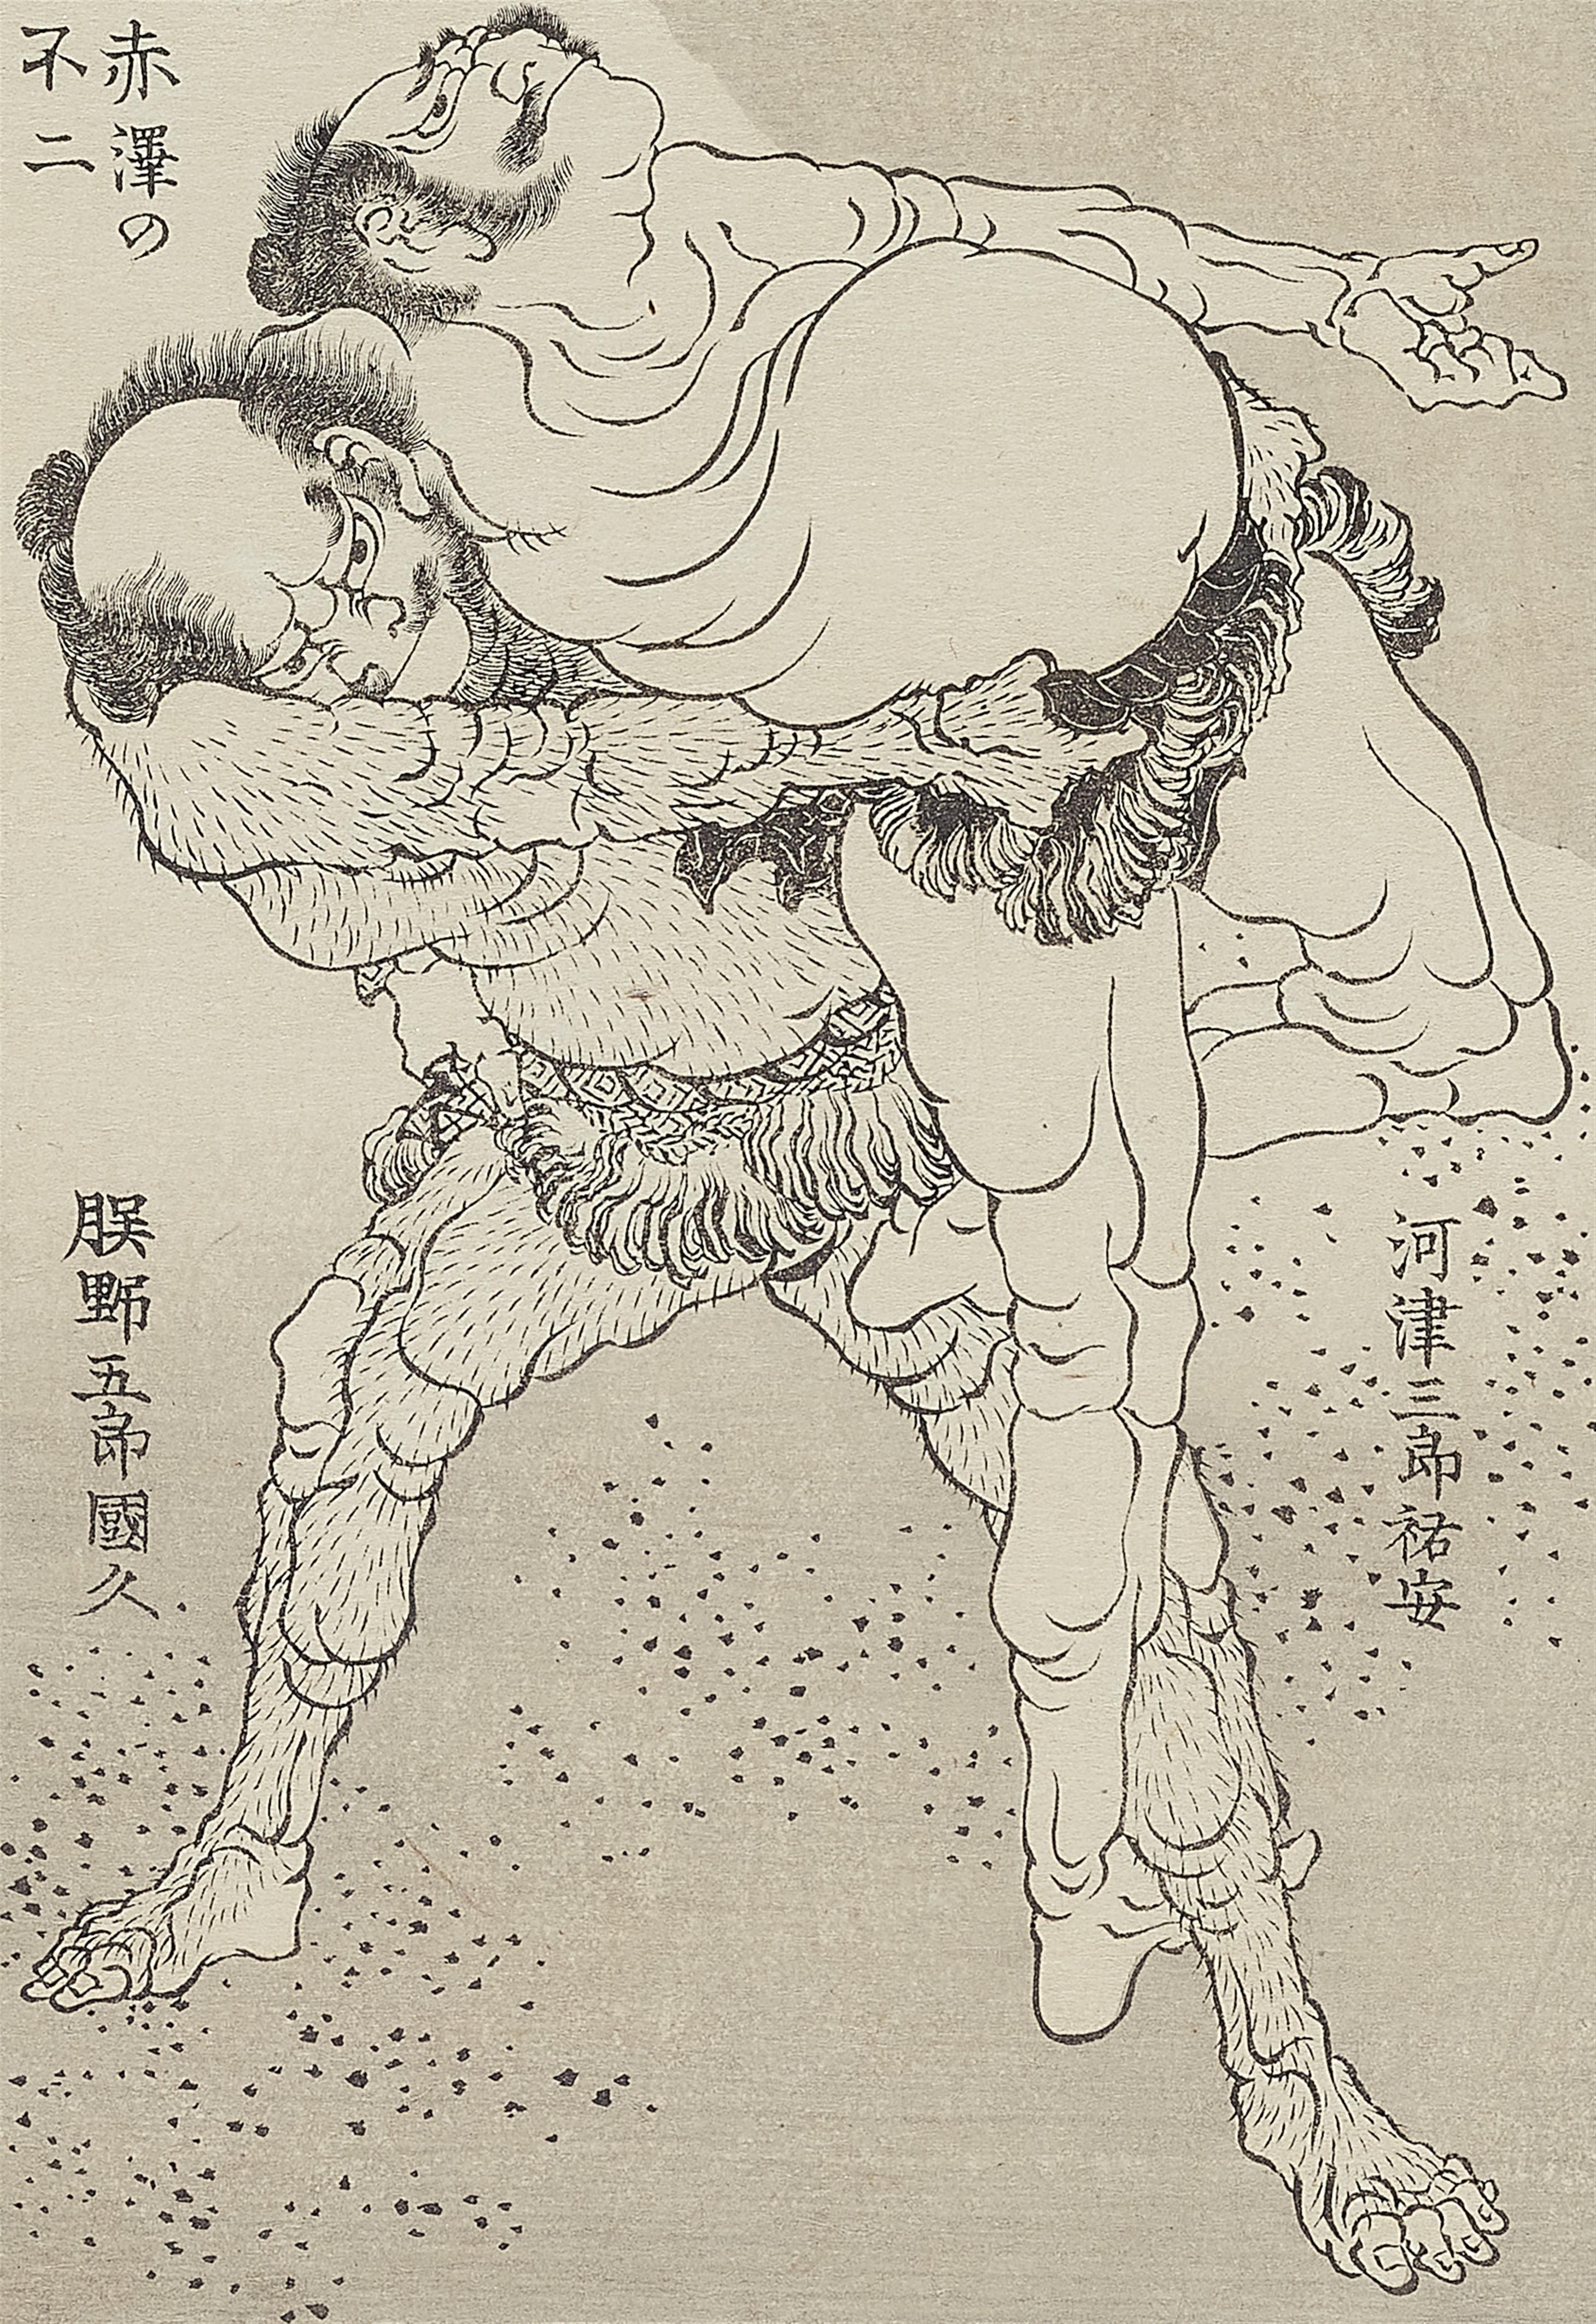 Katsushika Hokusai - Black and white illustrations from the album Fugaku hyakkei - image-1